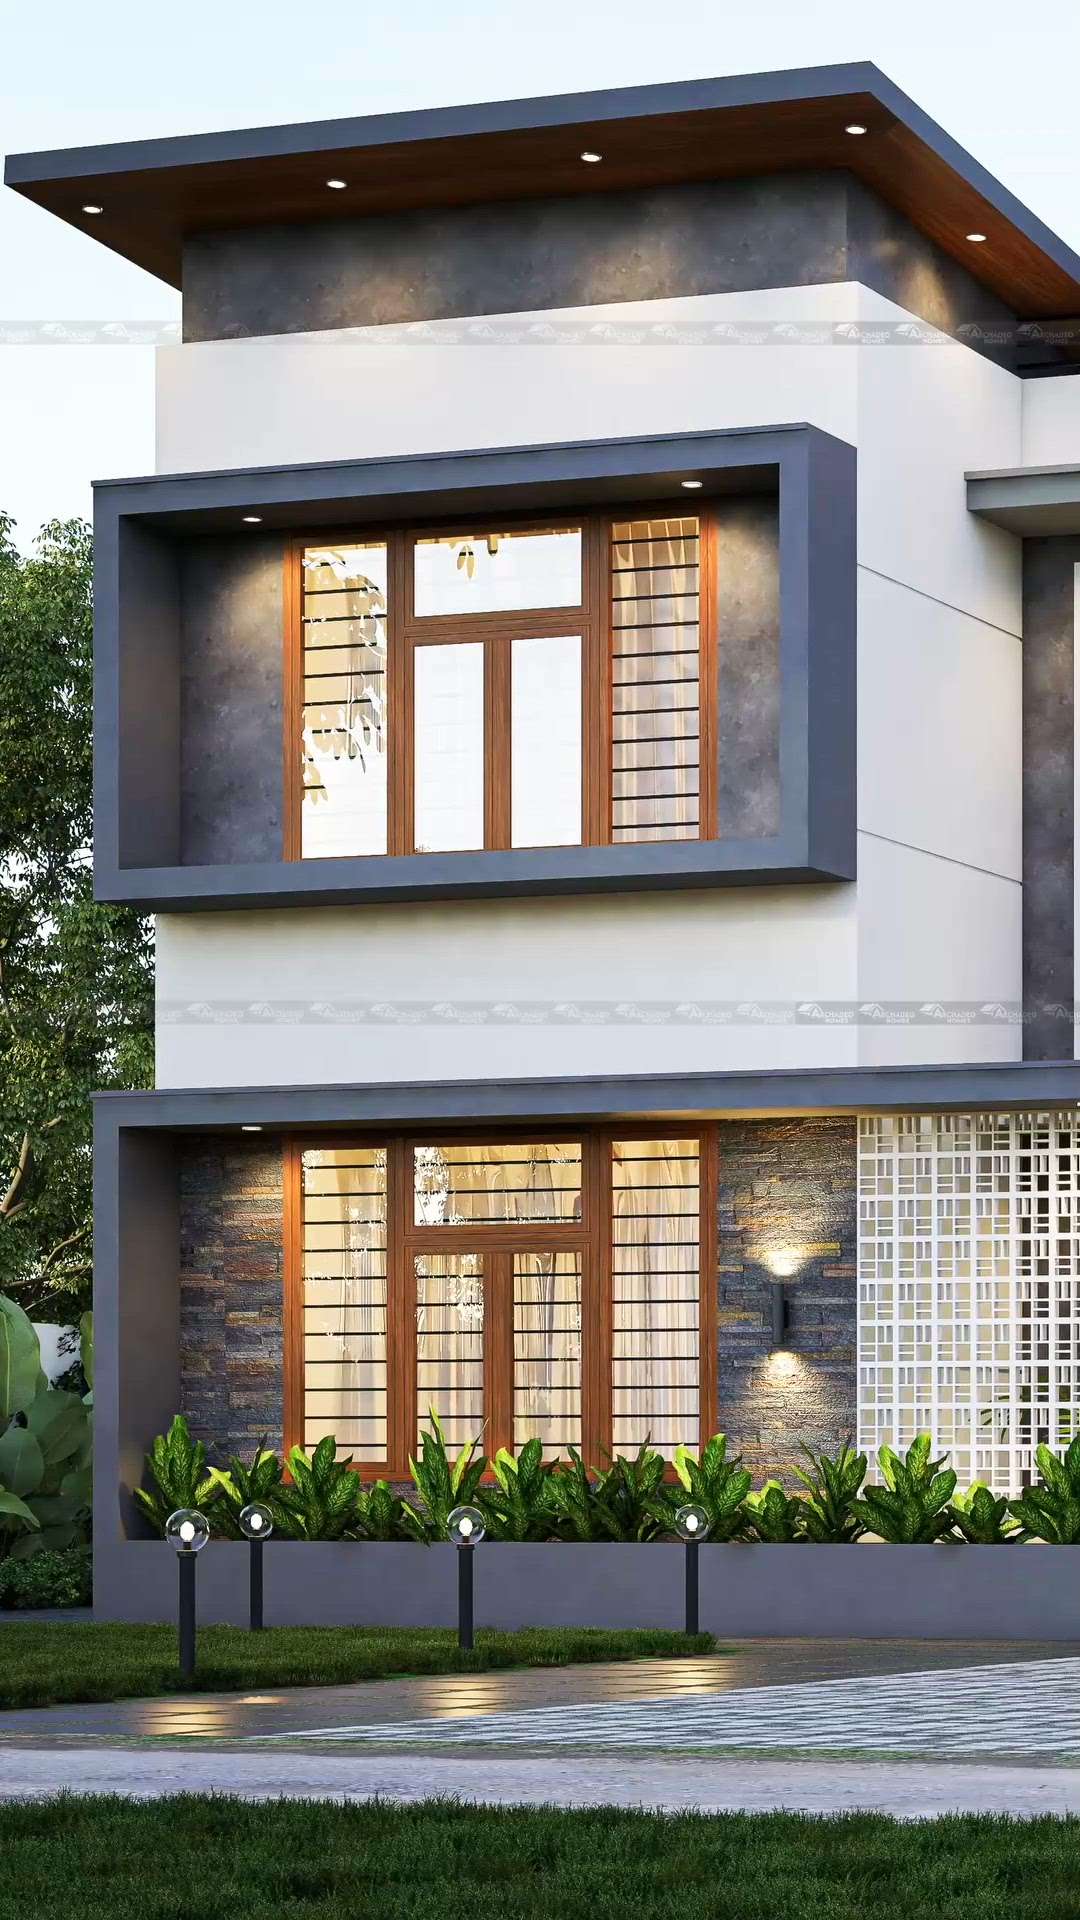 kerala house designs
#KeralaStyleHouse #HouseDesigns #architecturedesigns #Architectural&Interior